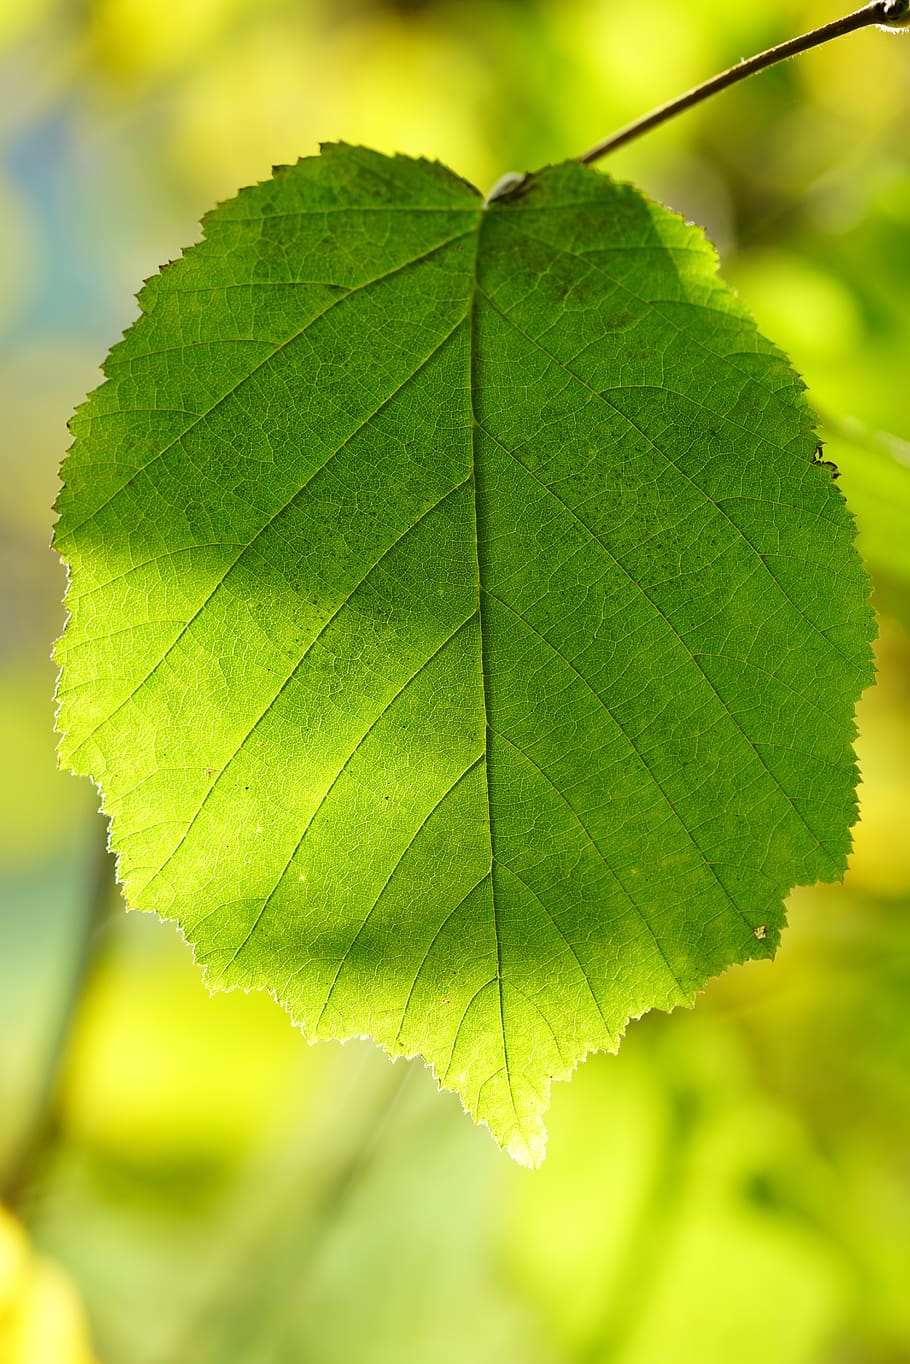 hazelnut leaf, leaf, common hazel, corylus avellana, hazel, birch greenhouse, betulaceae, plant part, green color, close-up